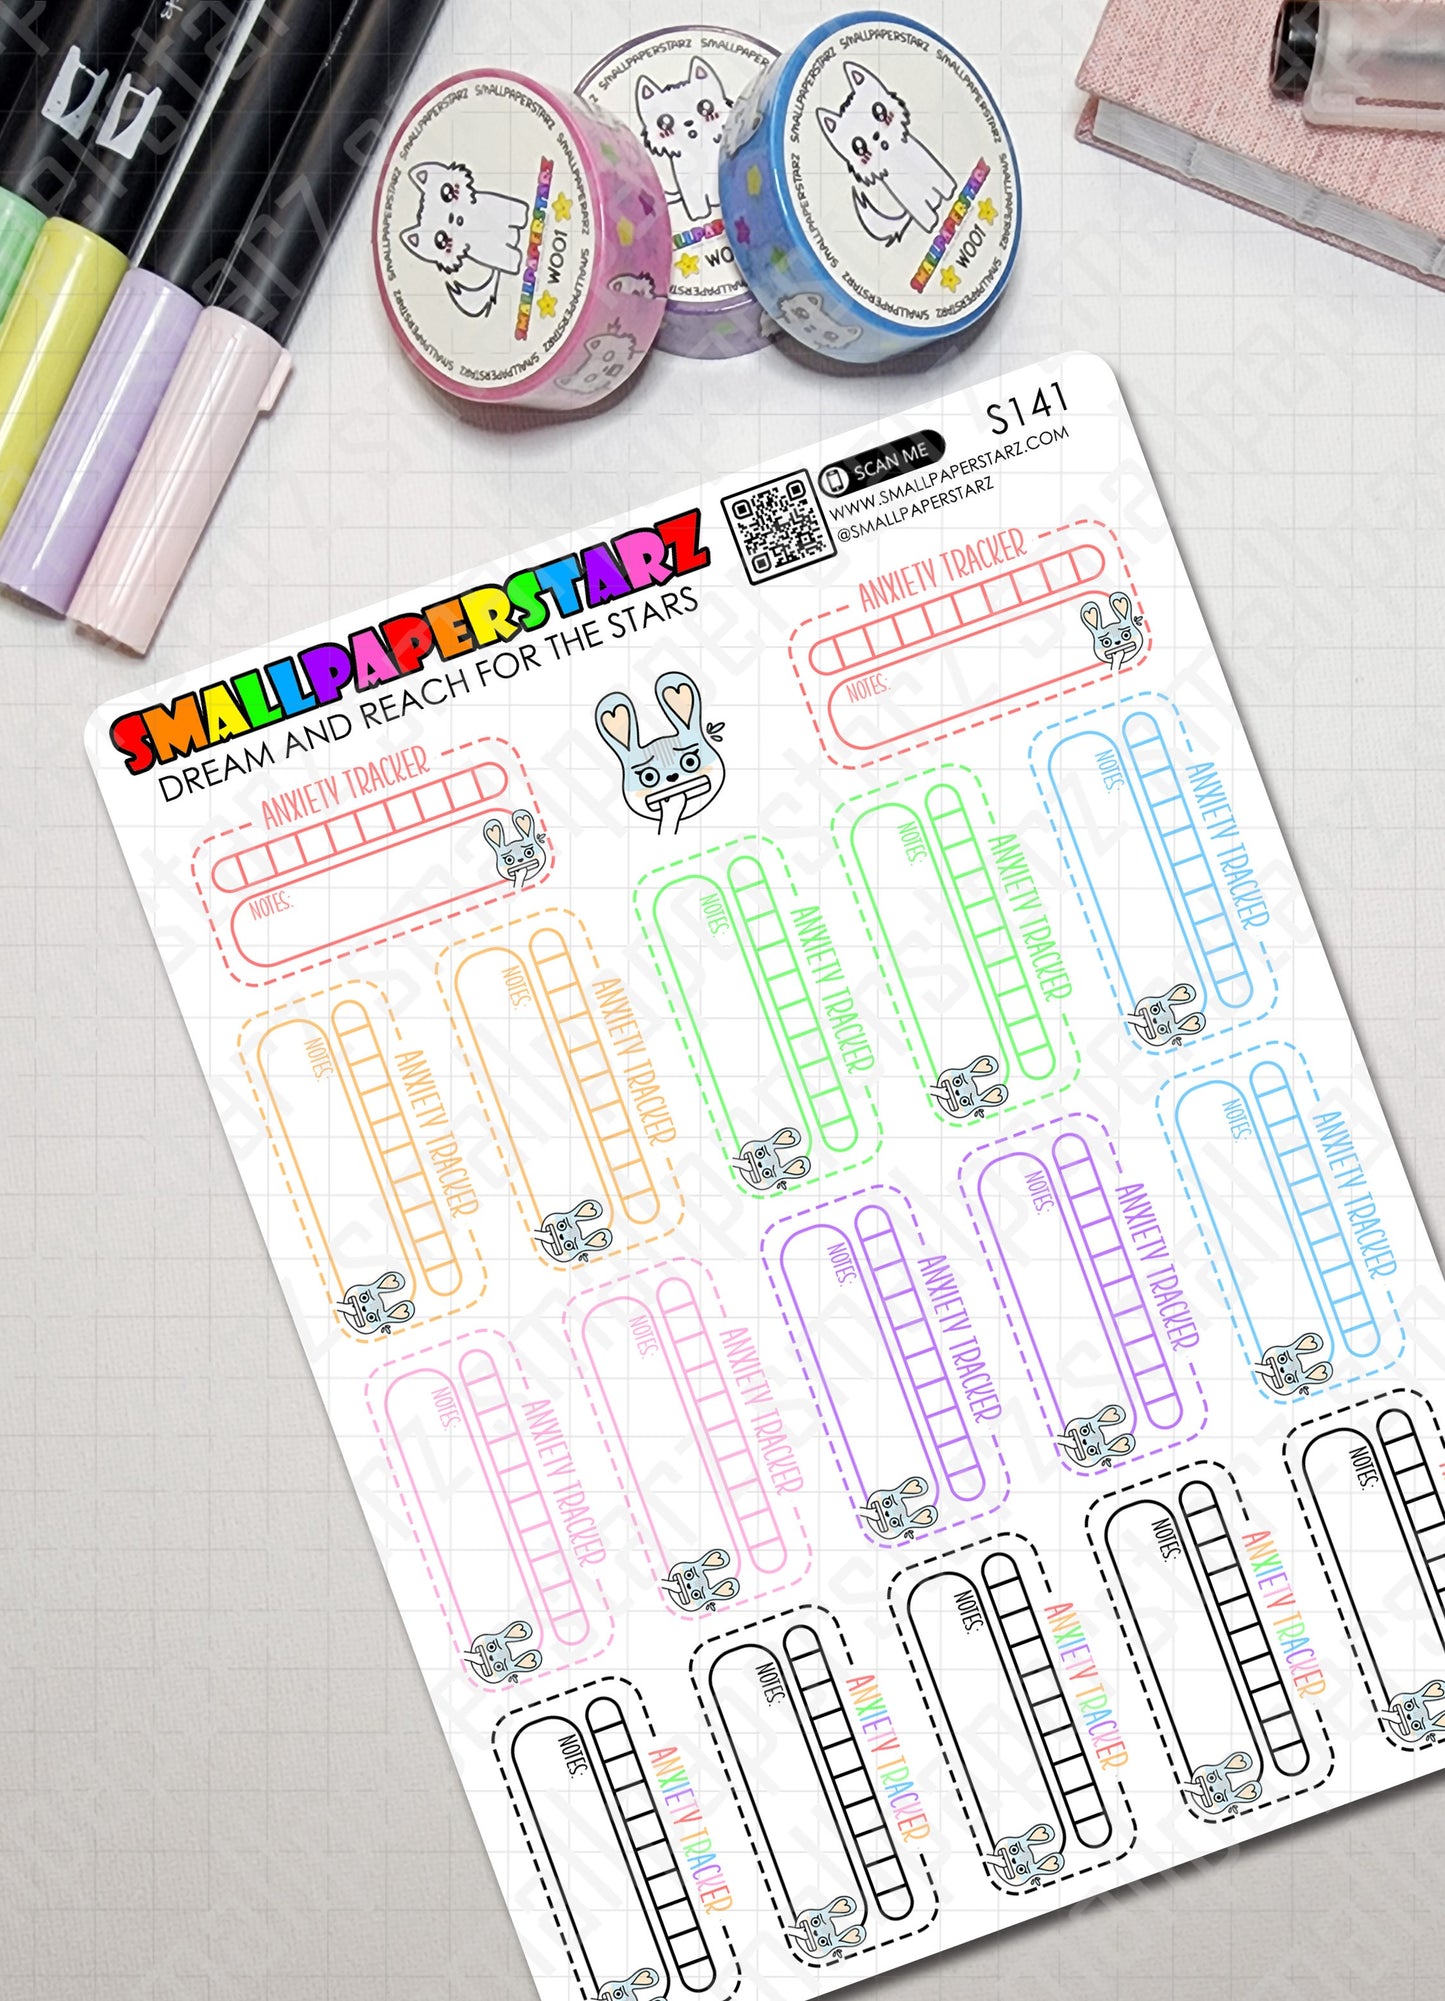 S141 - Anxiety Tracker Rainbow Sticker Sheet